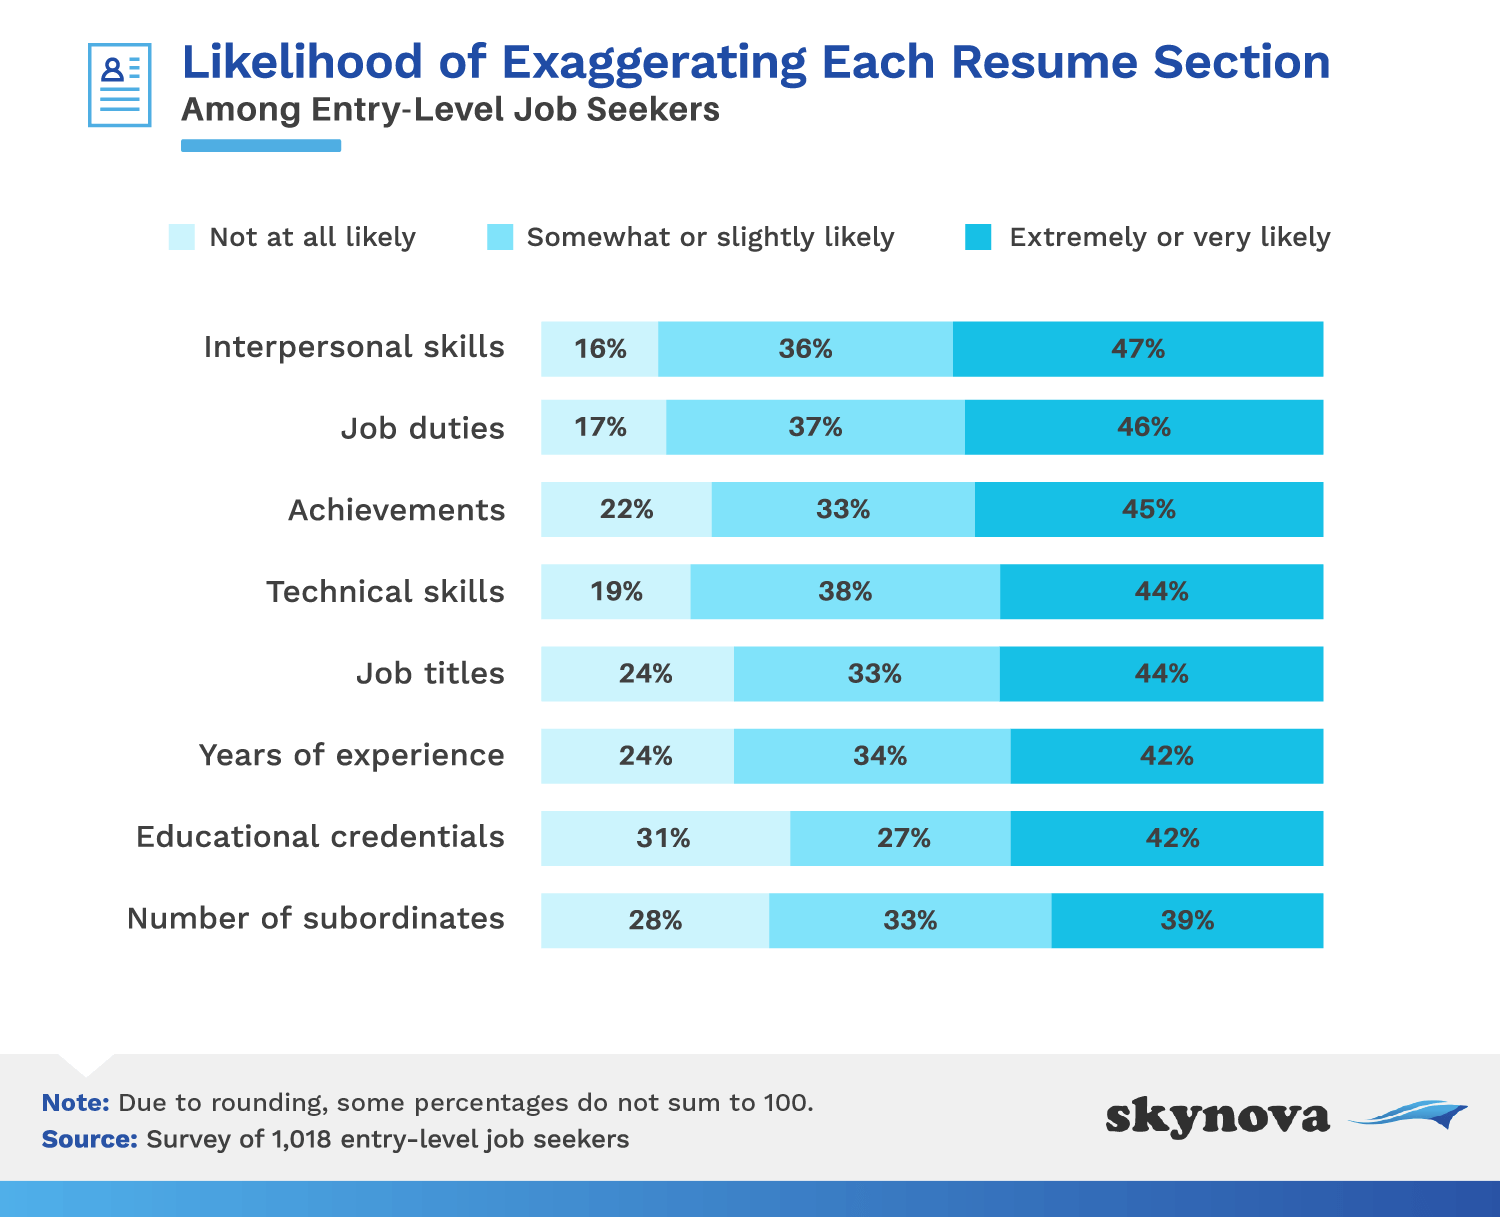 Likelihood of exaggerating each resume section